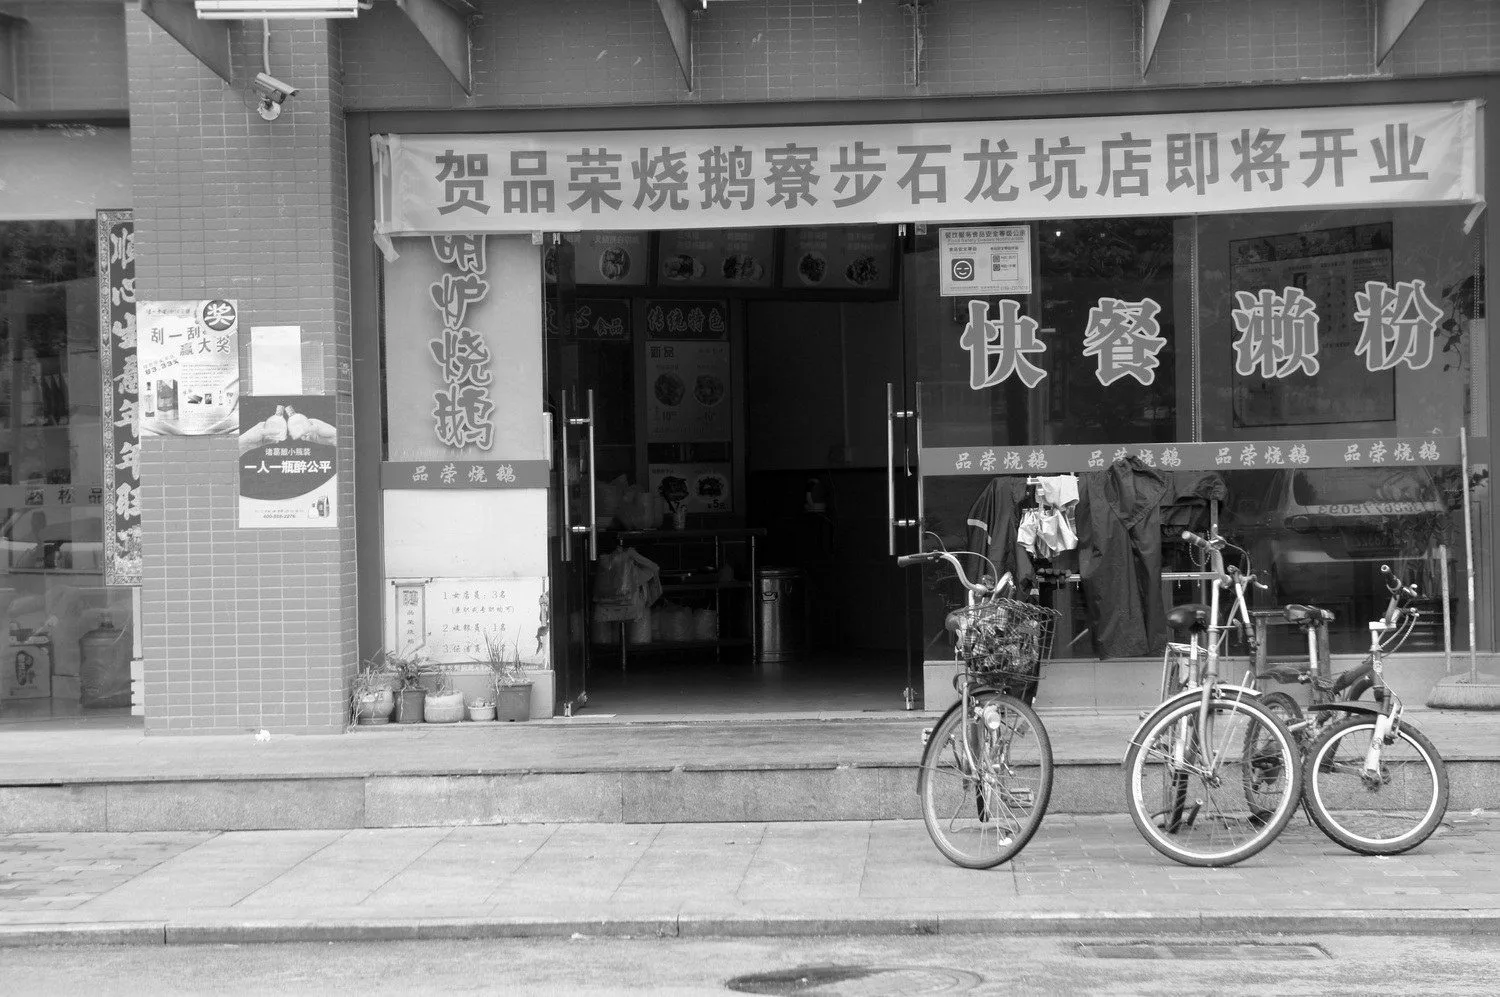 Bicycles in front of local shop in Dalang, Dongguan, China.